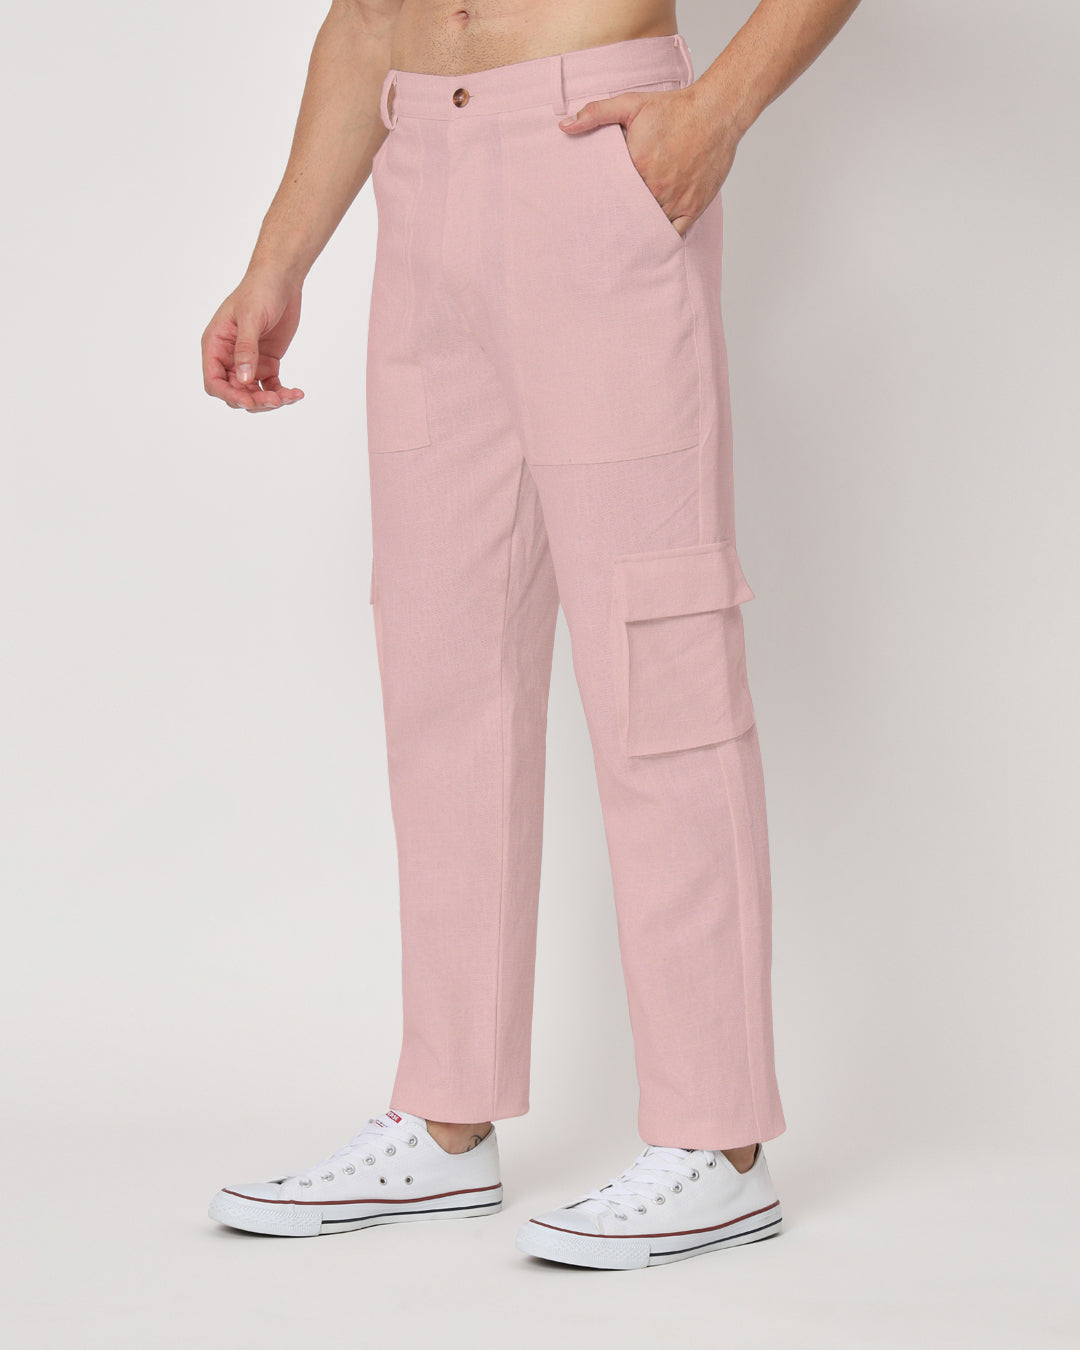 Combo: Function Flex Grey & Fondant Pink Men's Pants- Set Of 2